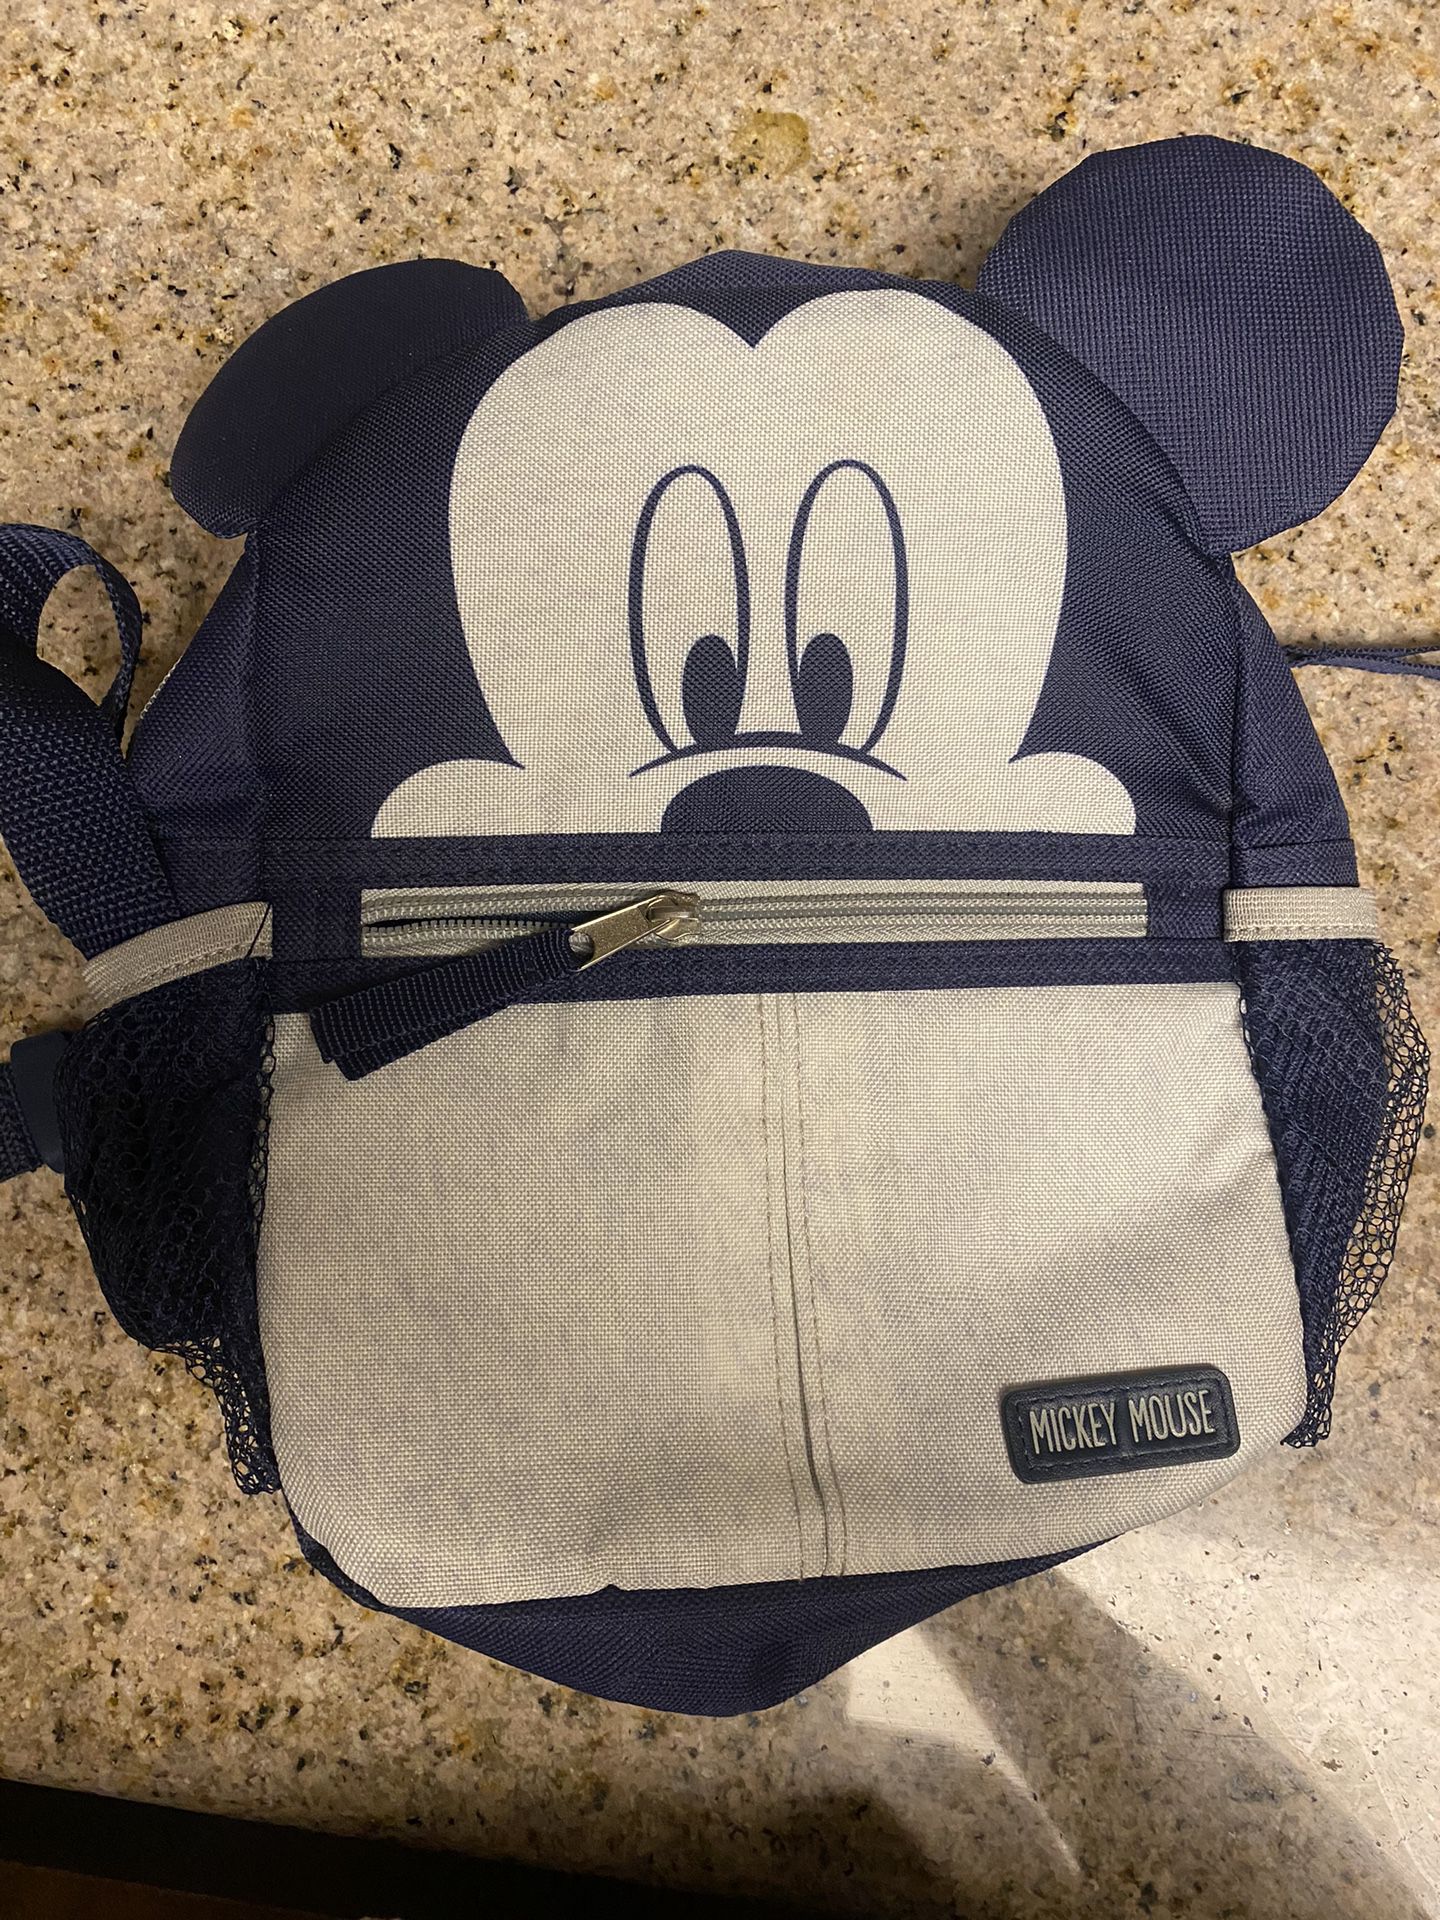 Backpack Leash For Toddler